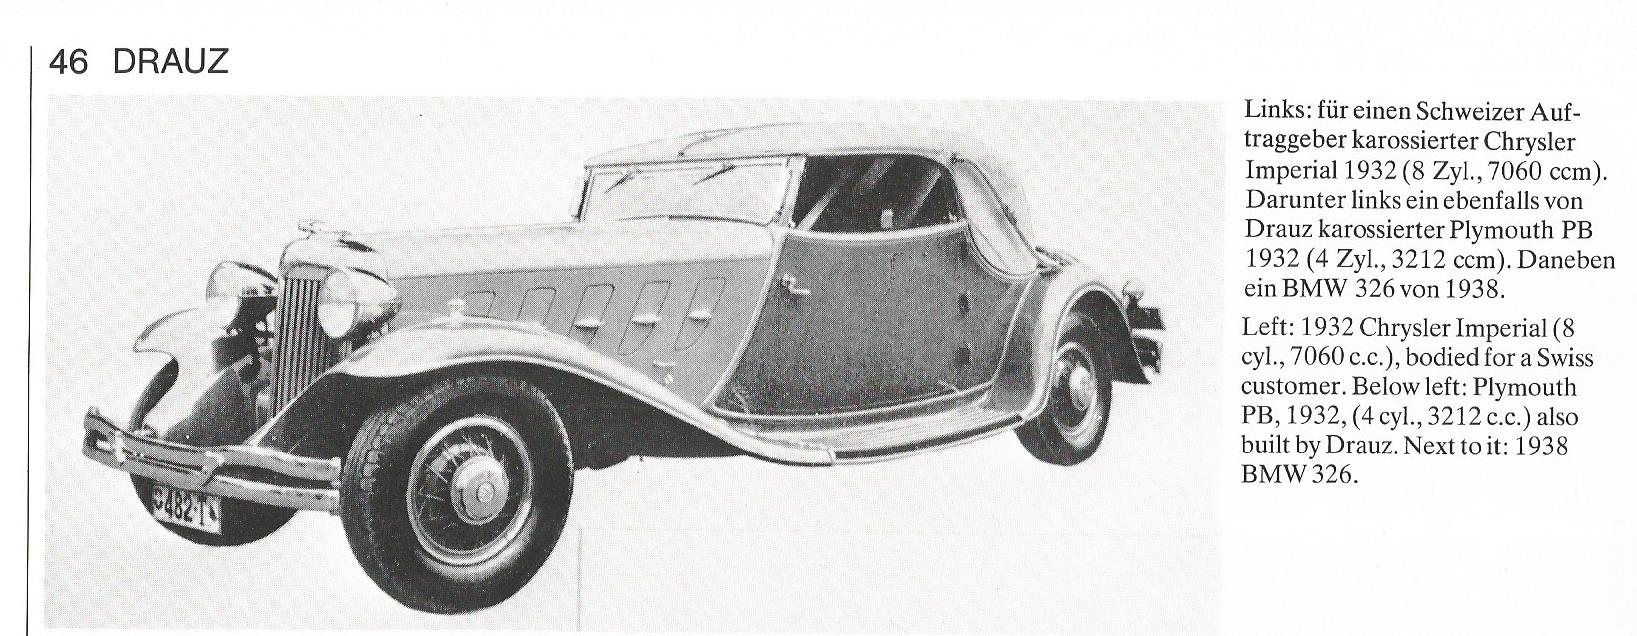 1931 Chrysler Imperial CG Cabriolet by Drauz